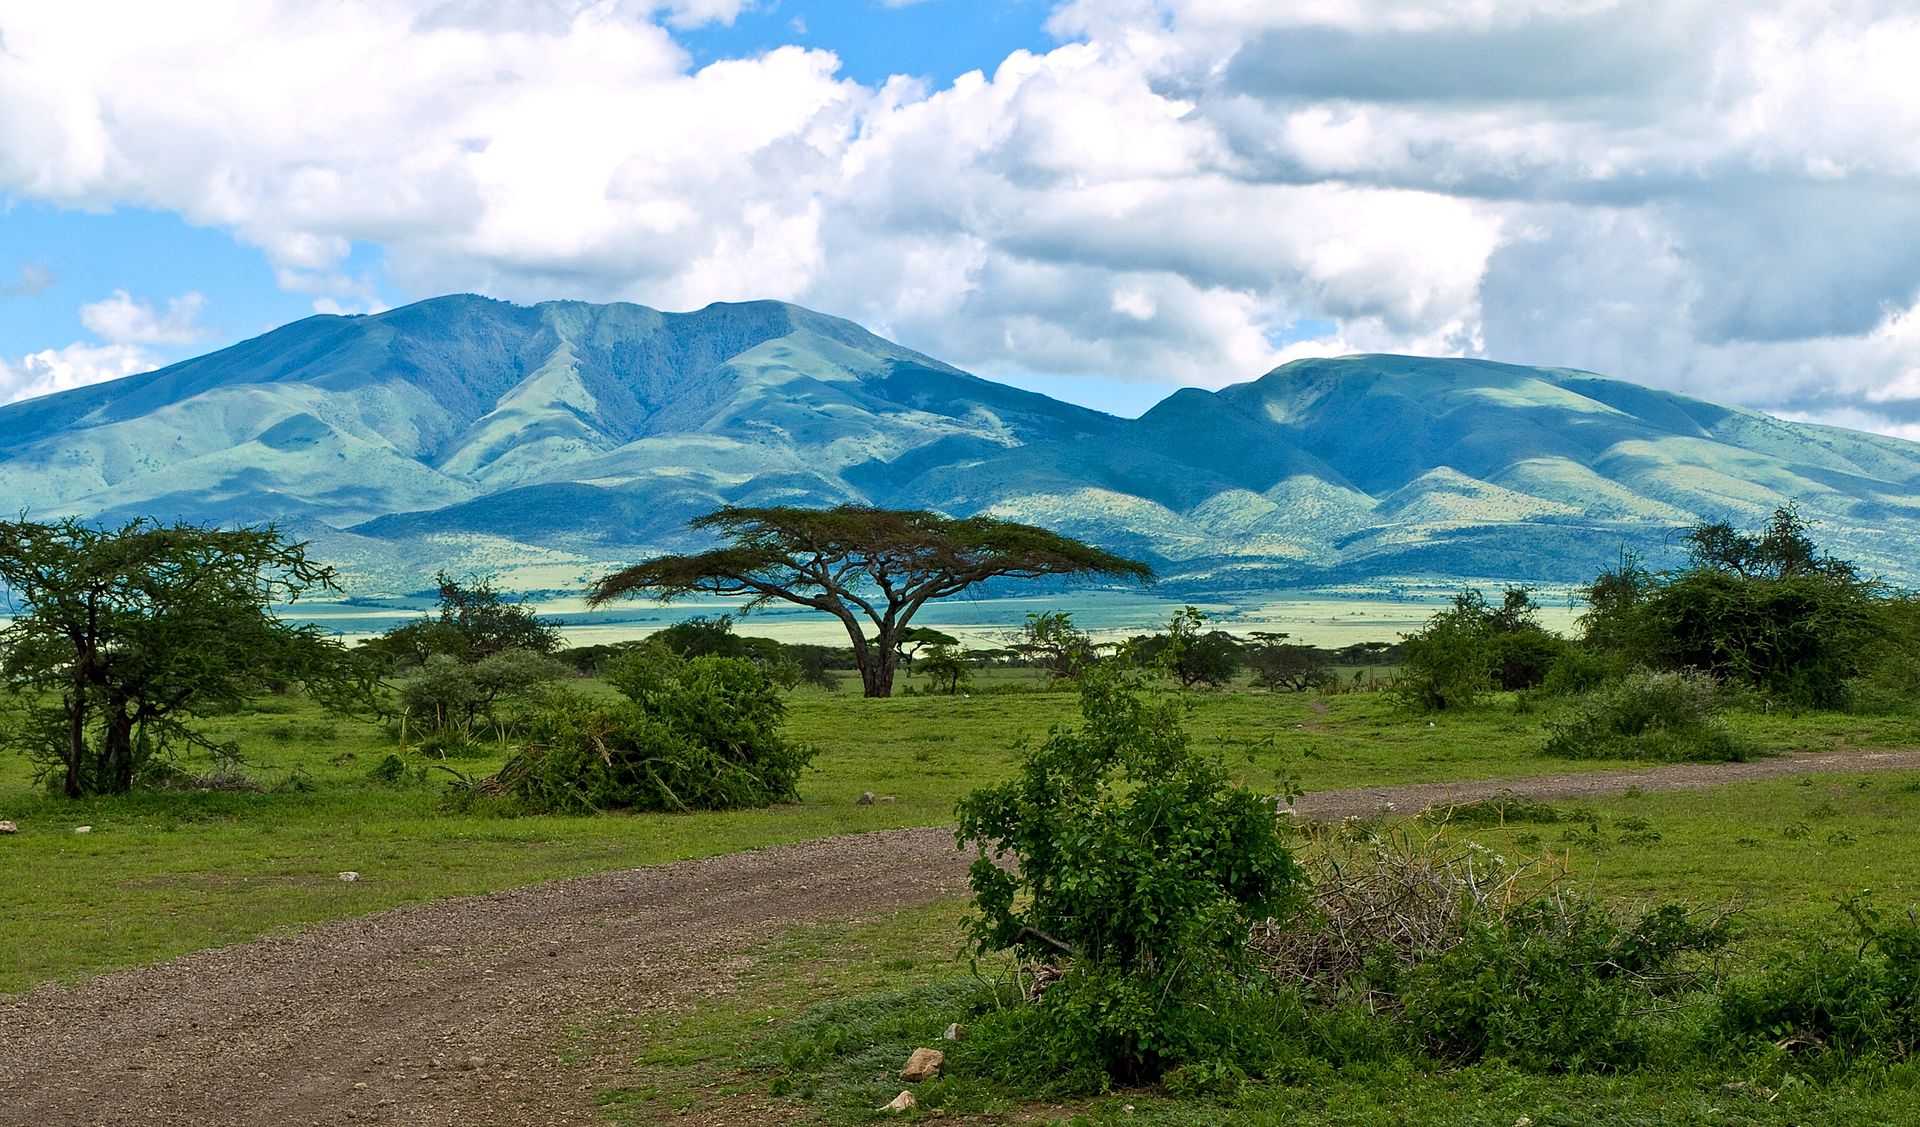 Berge in der Serengeti (c) William Warby CC BY SA 2.0